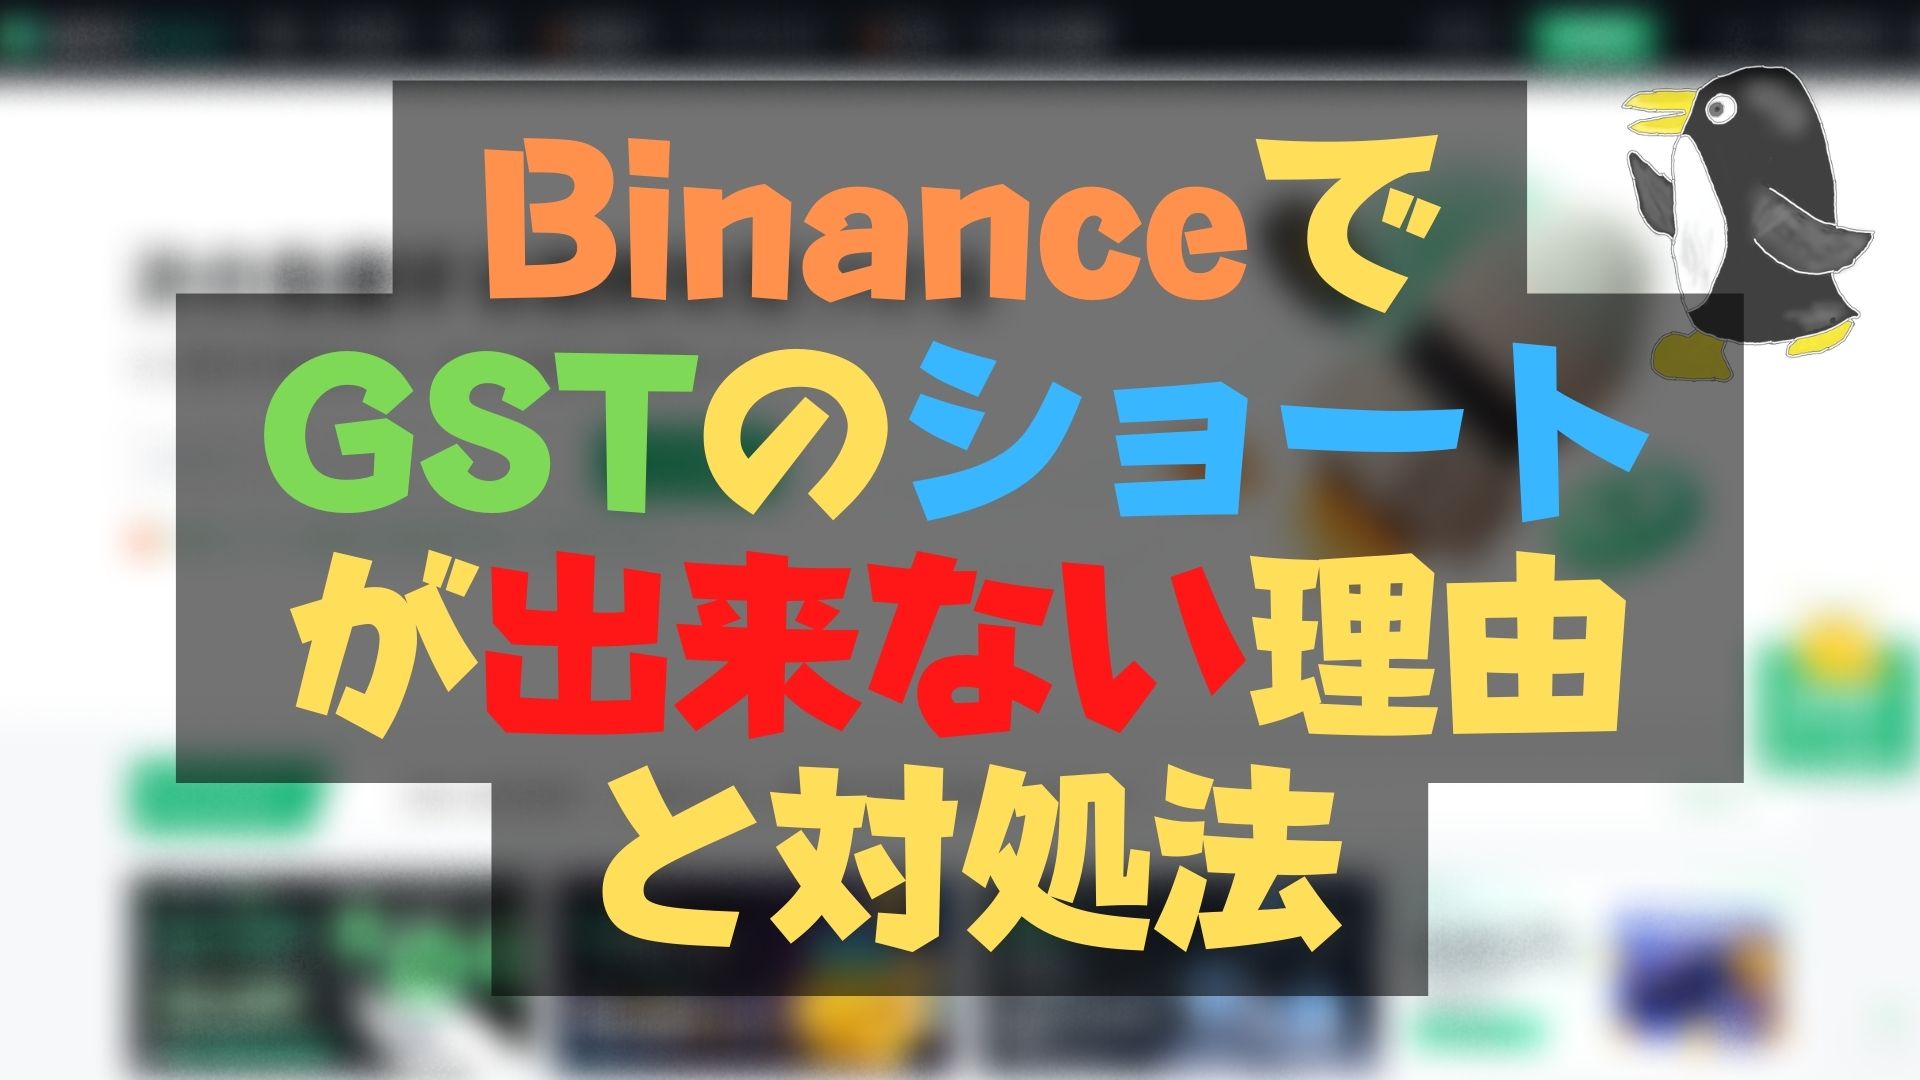 BinanceでGSTのショートが出来ない理由と対処法【STEPN】